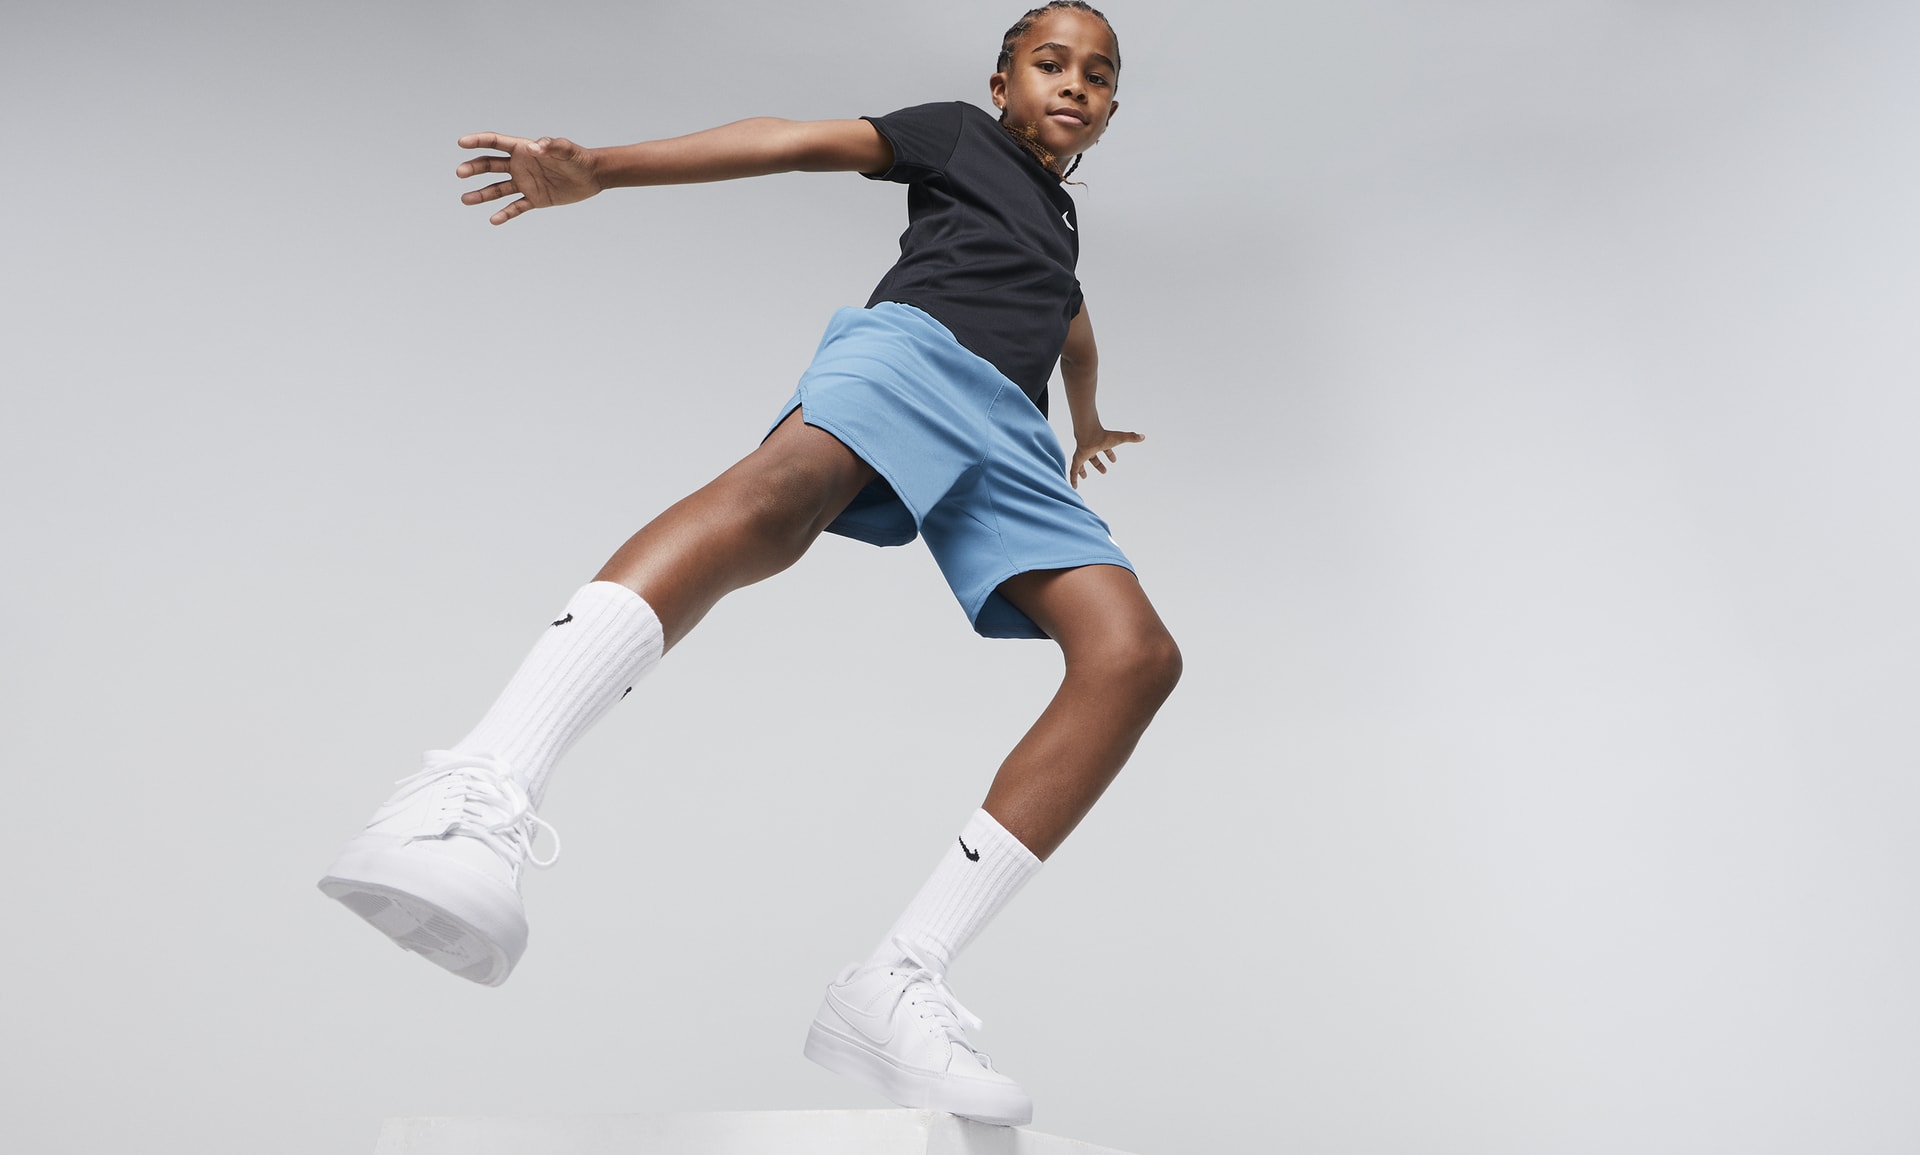 Nike Kids' Court Legacy White & Black Shoes